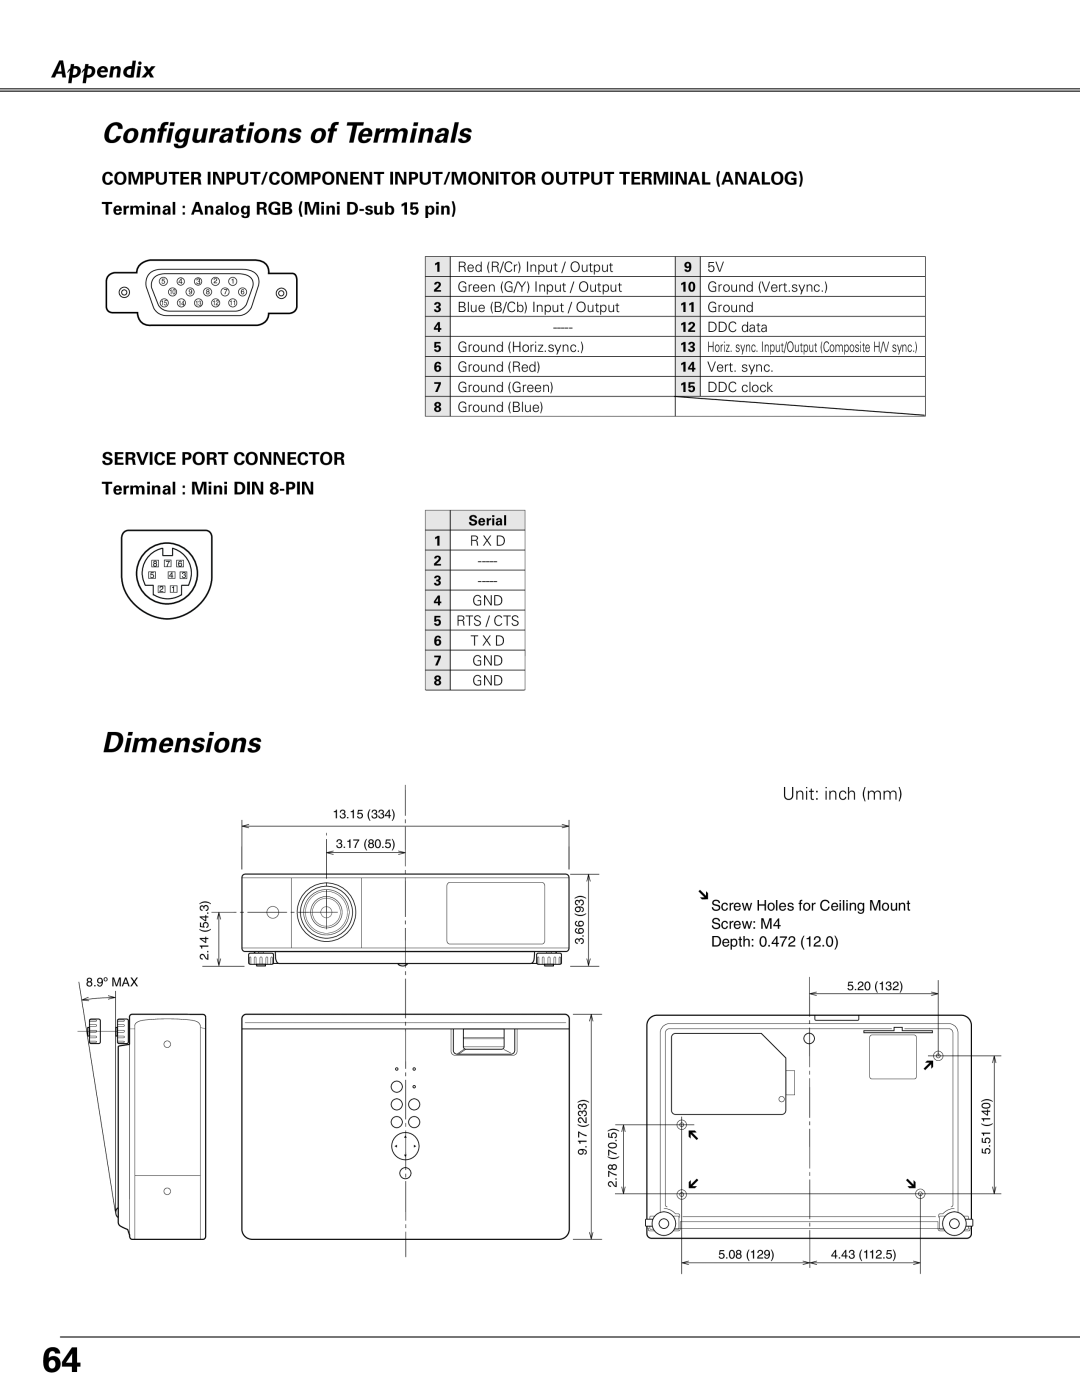 Eiki LC-XB41 owner manual Configurations of Terminals, Dimensions, Appendix, Terminal Analog RGB Mini D-sub 15 pin 